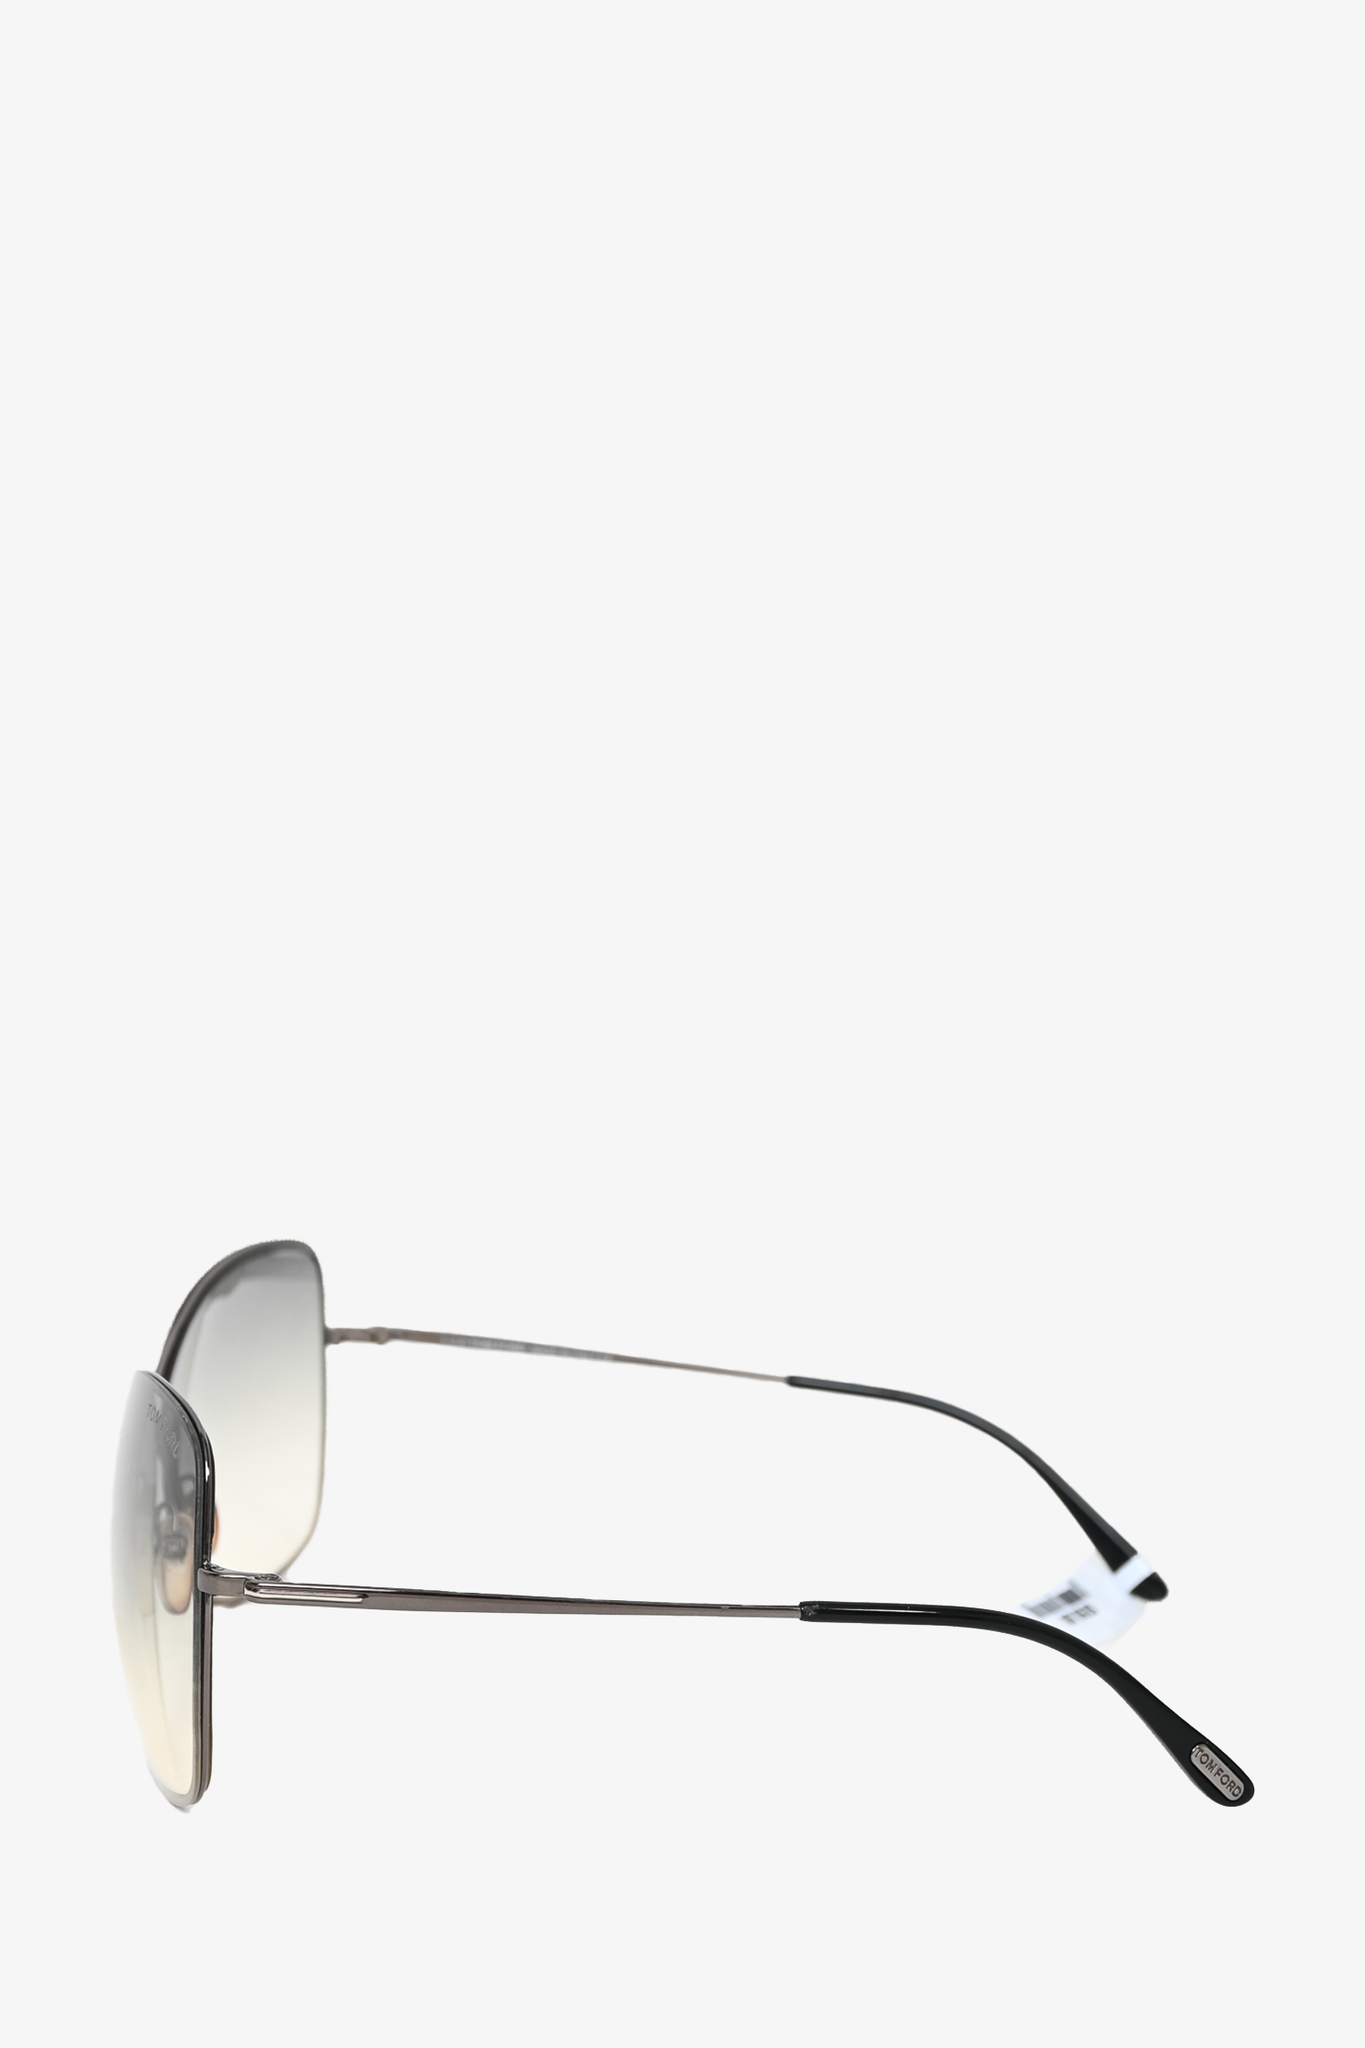 Tom Ford Grey Criss Cross Oversized Sunglasses